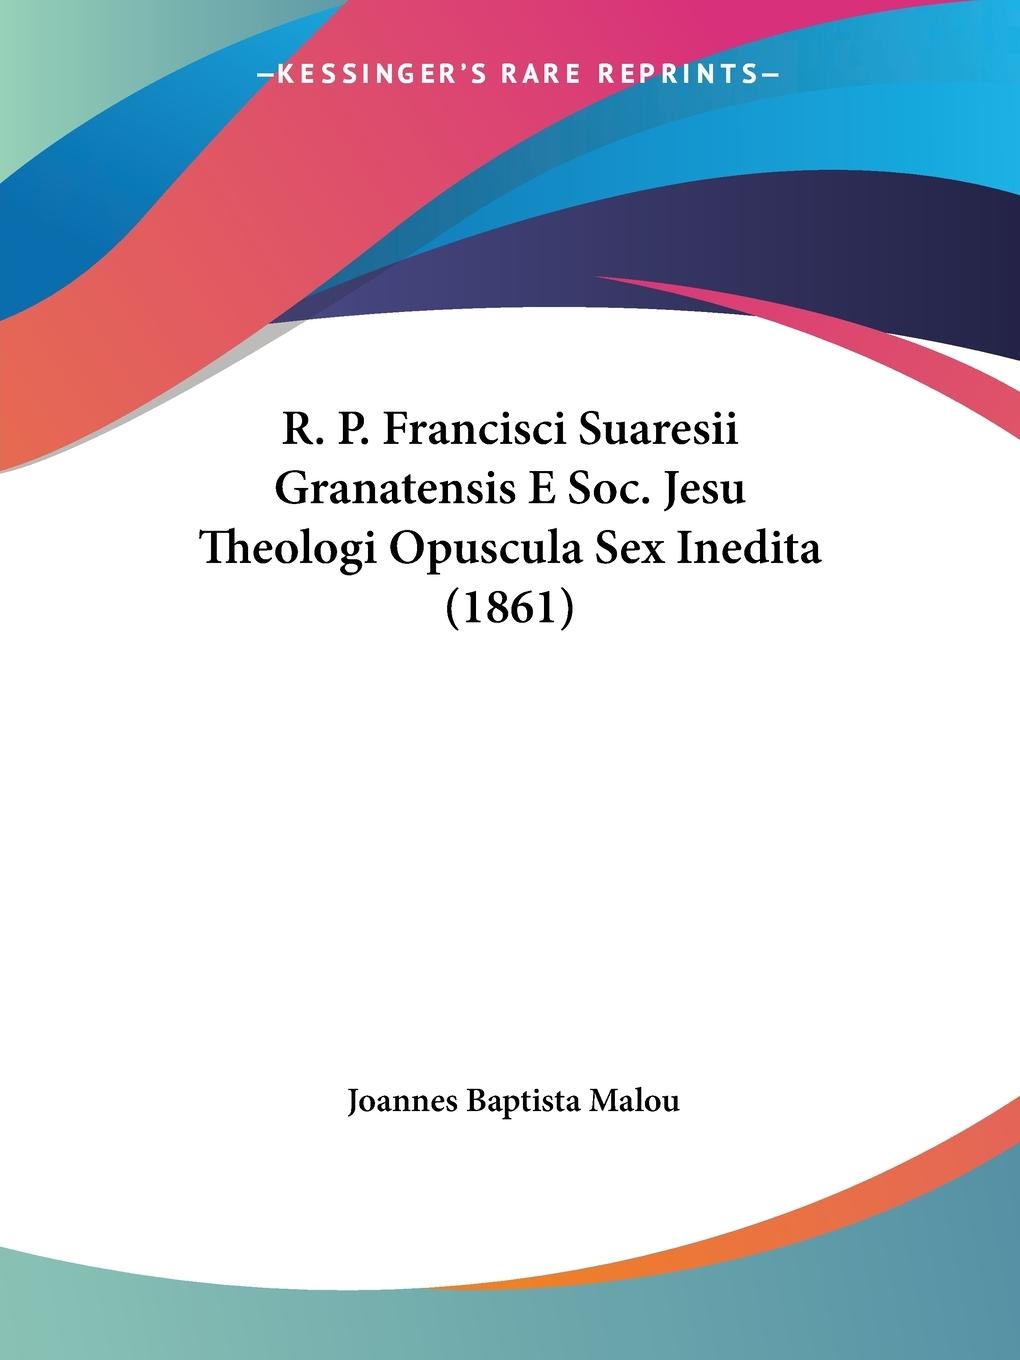 R. P. Francisci Suaresii Granatensis E Soc. Jesu Theologi Opuscula Sex Inedita (1861) - Malou, Joannes Baptista